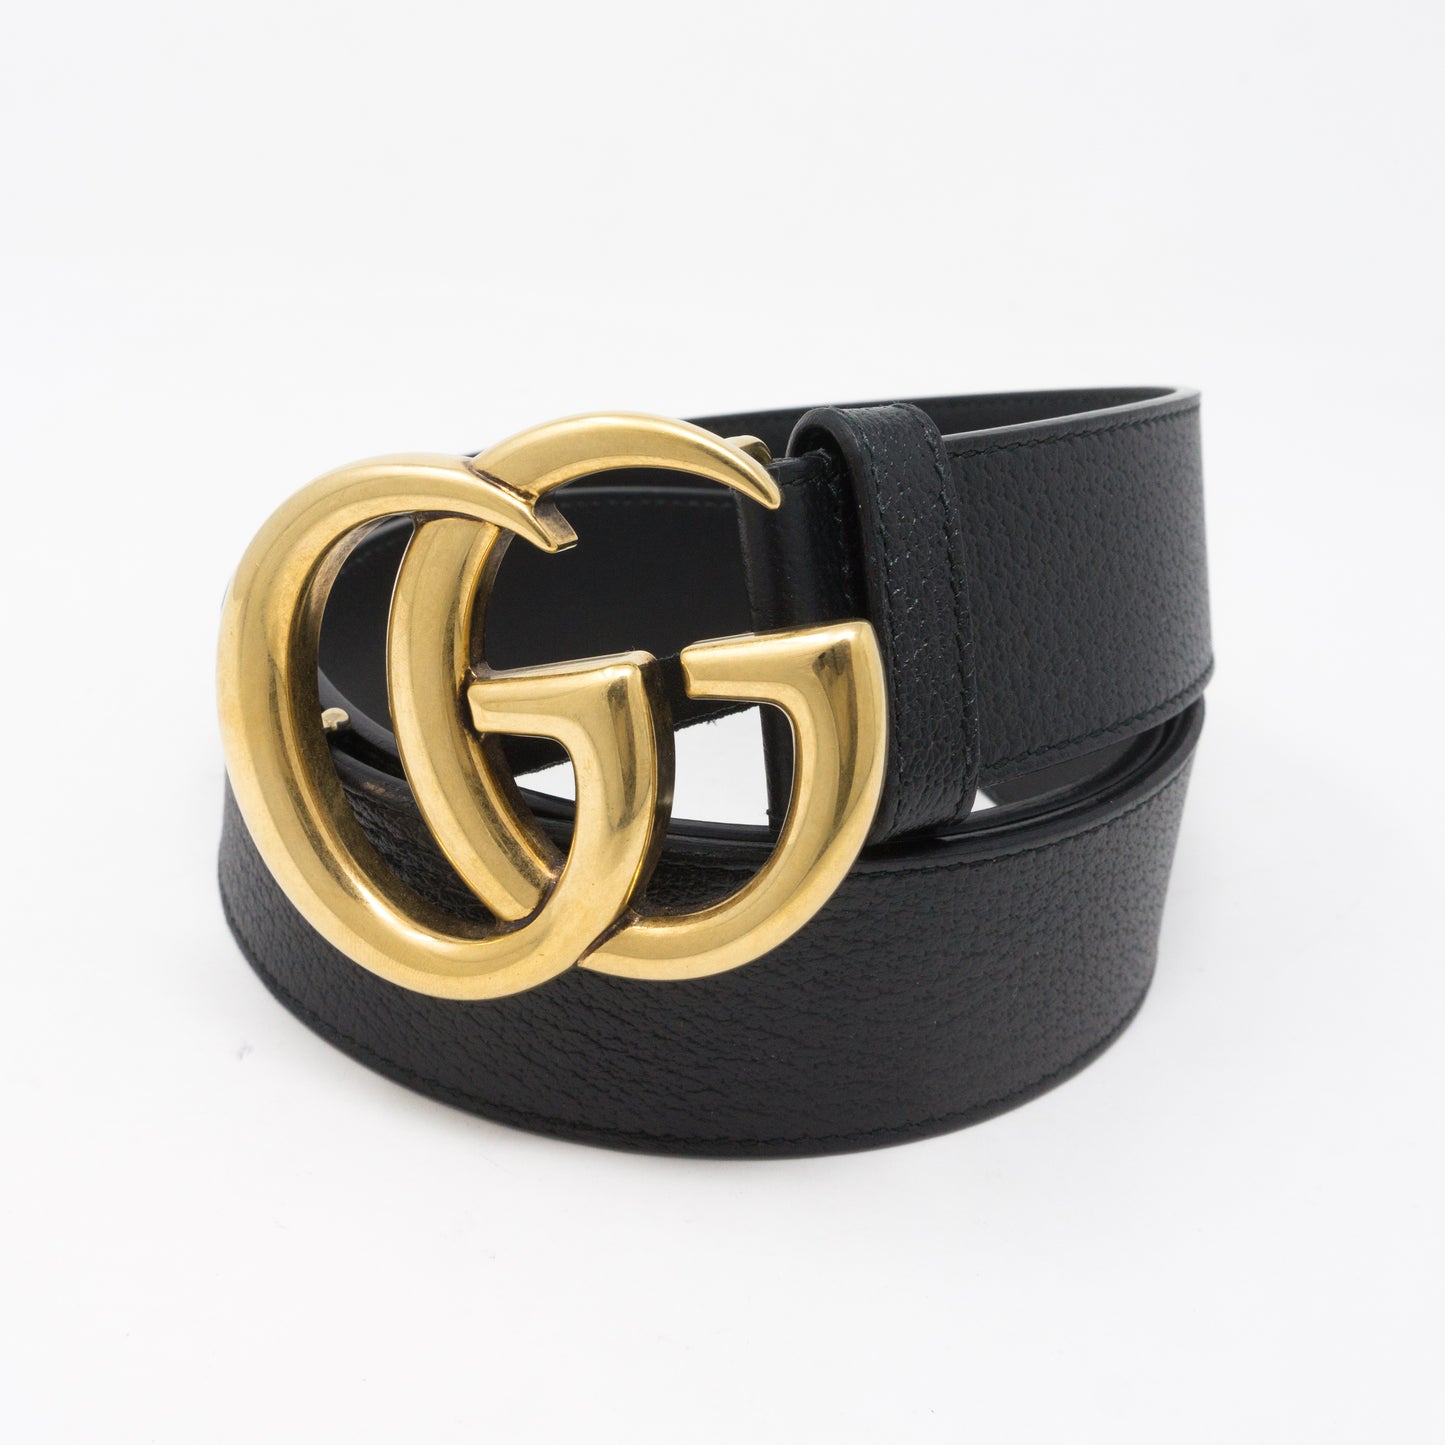 GG Marmont Black Leather Belt 85 cm